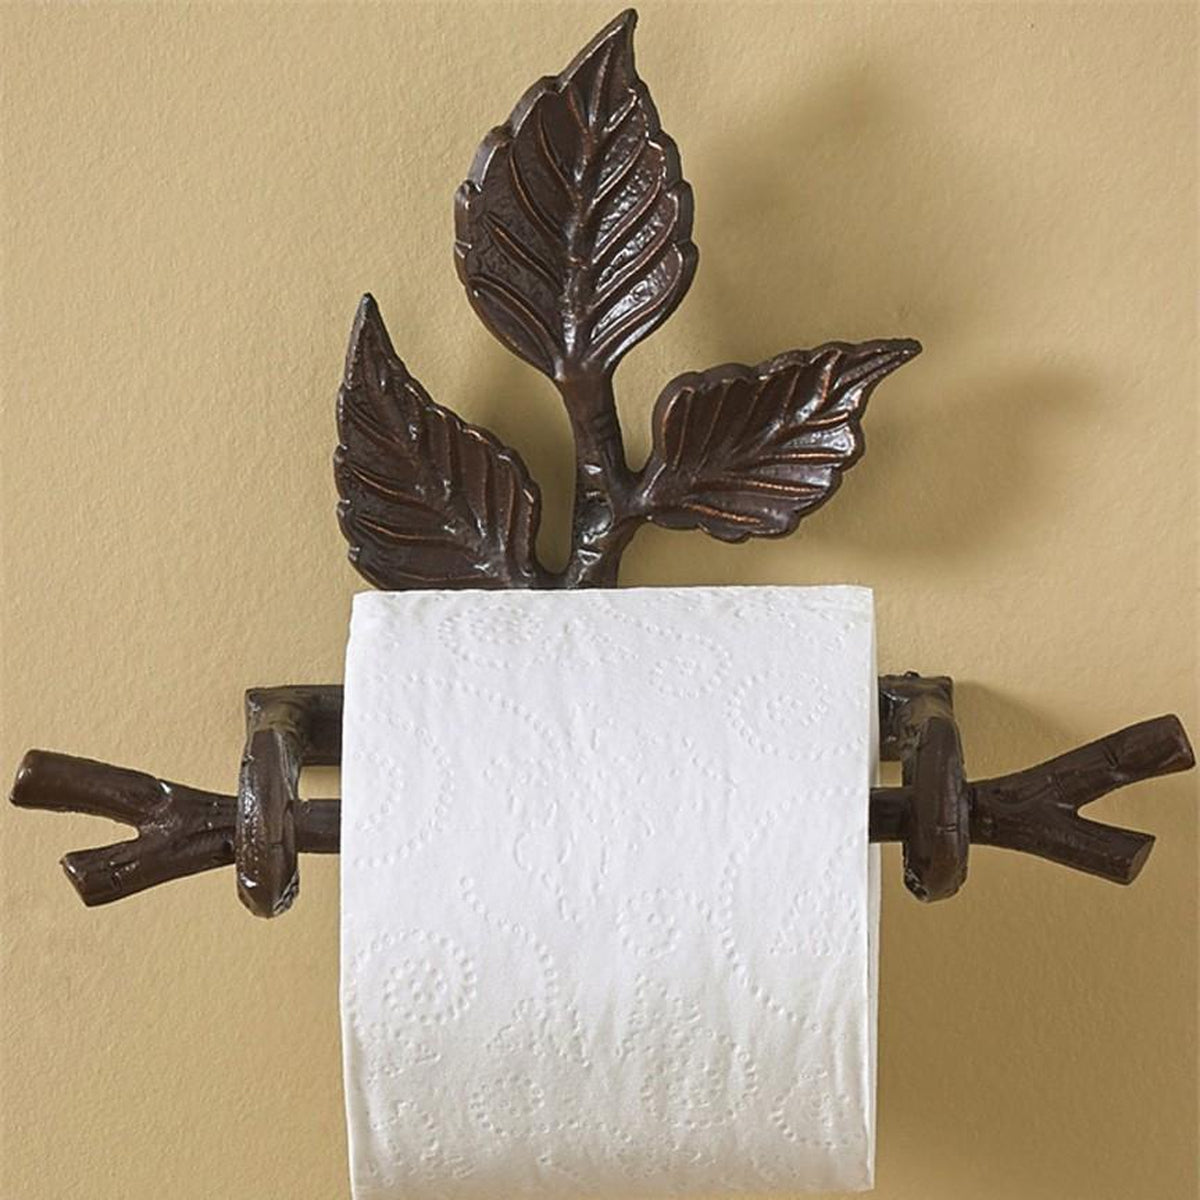 Wrought Iron Toilet Paper Holder